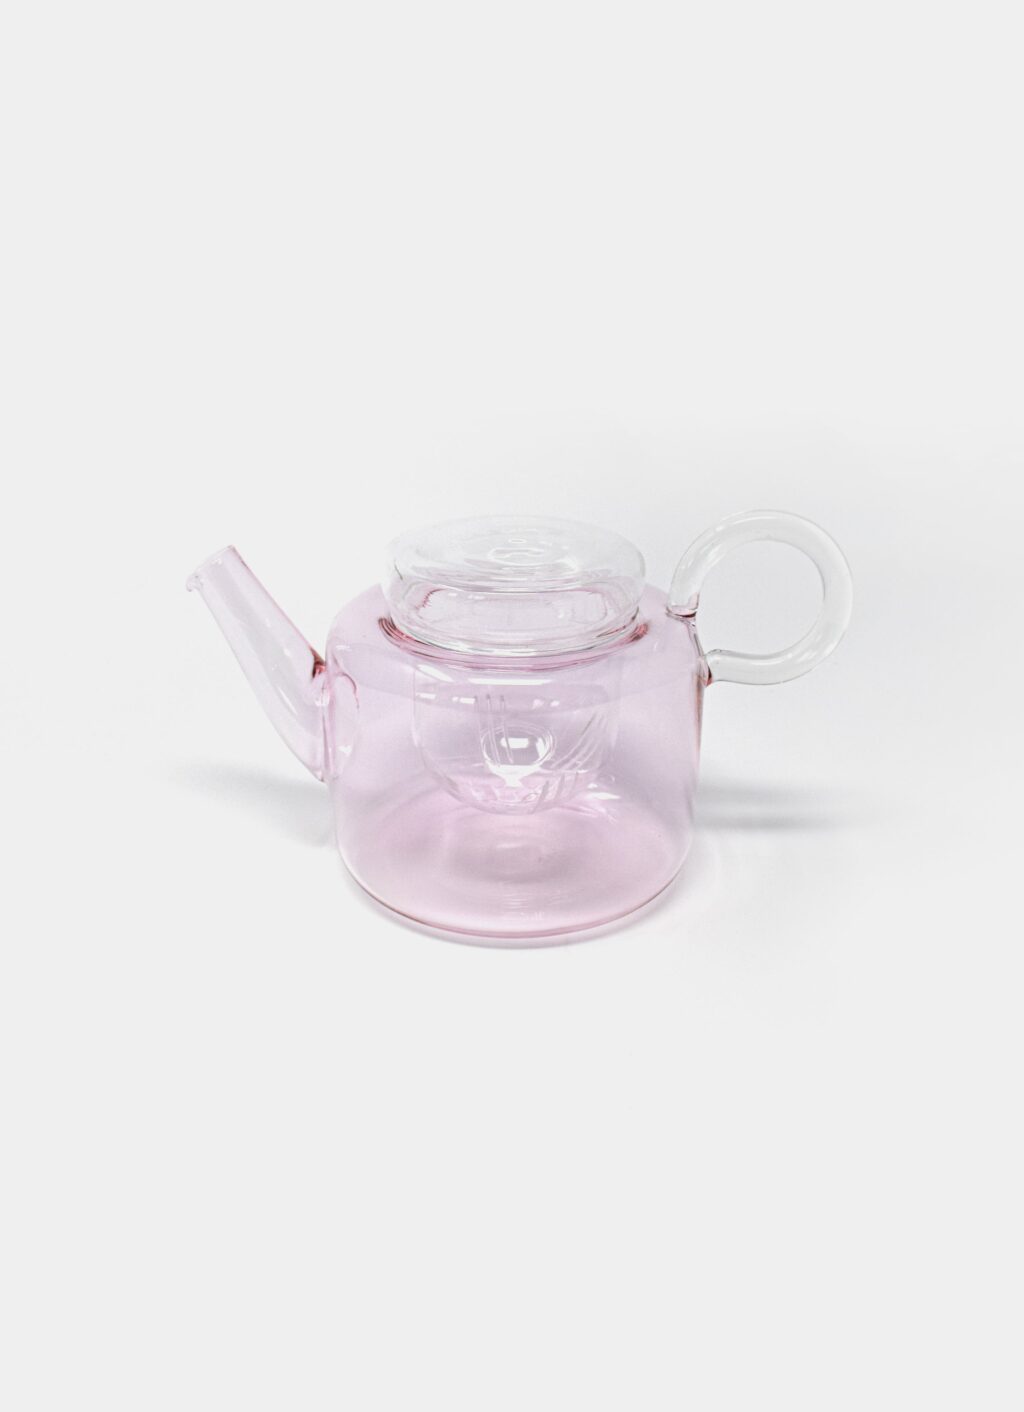 Ichendorf Milano - Marco Sironi - Piuma - Low Teapot with Filter - Pink